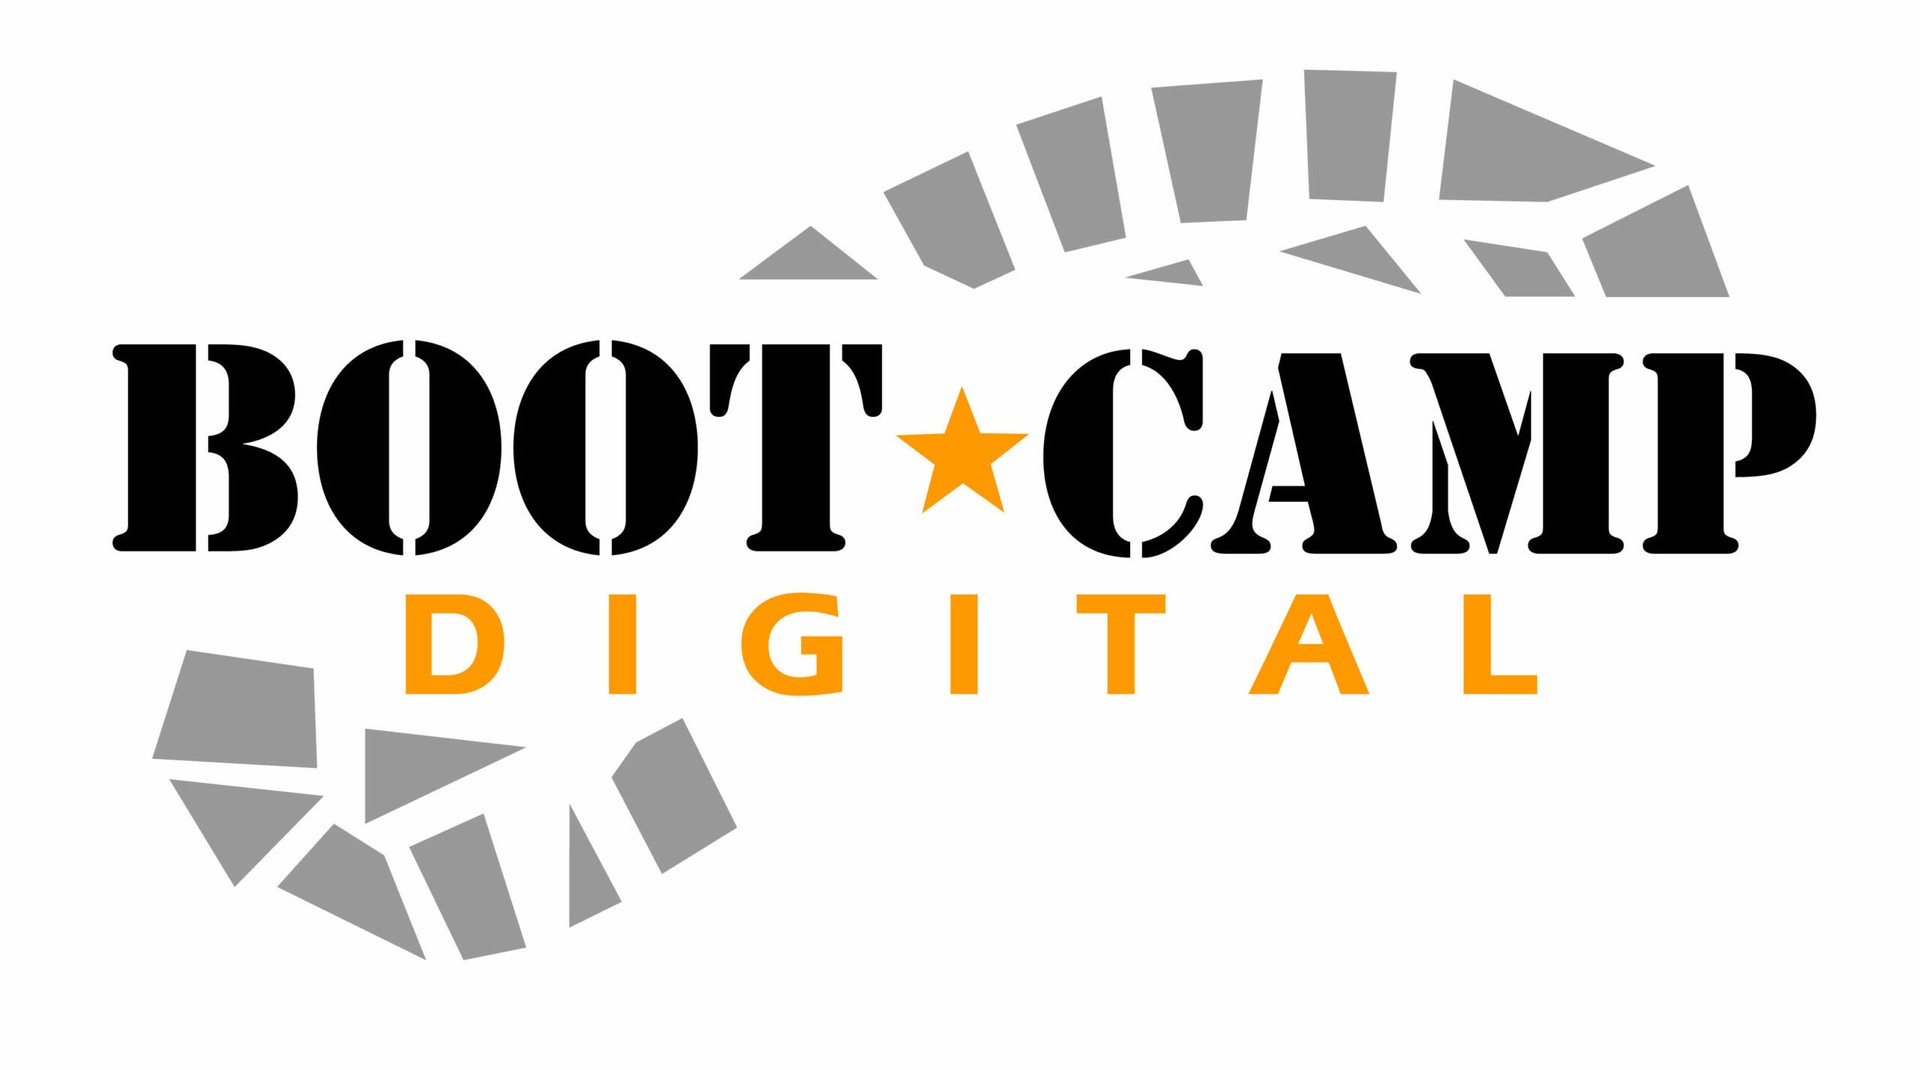 Digital marketing courses in Sri Lanka - Bootcamp logo